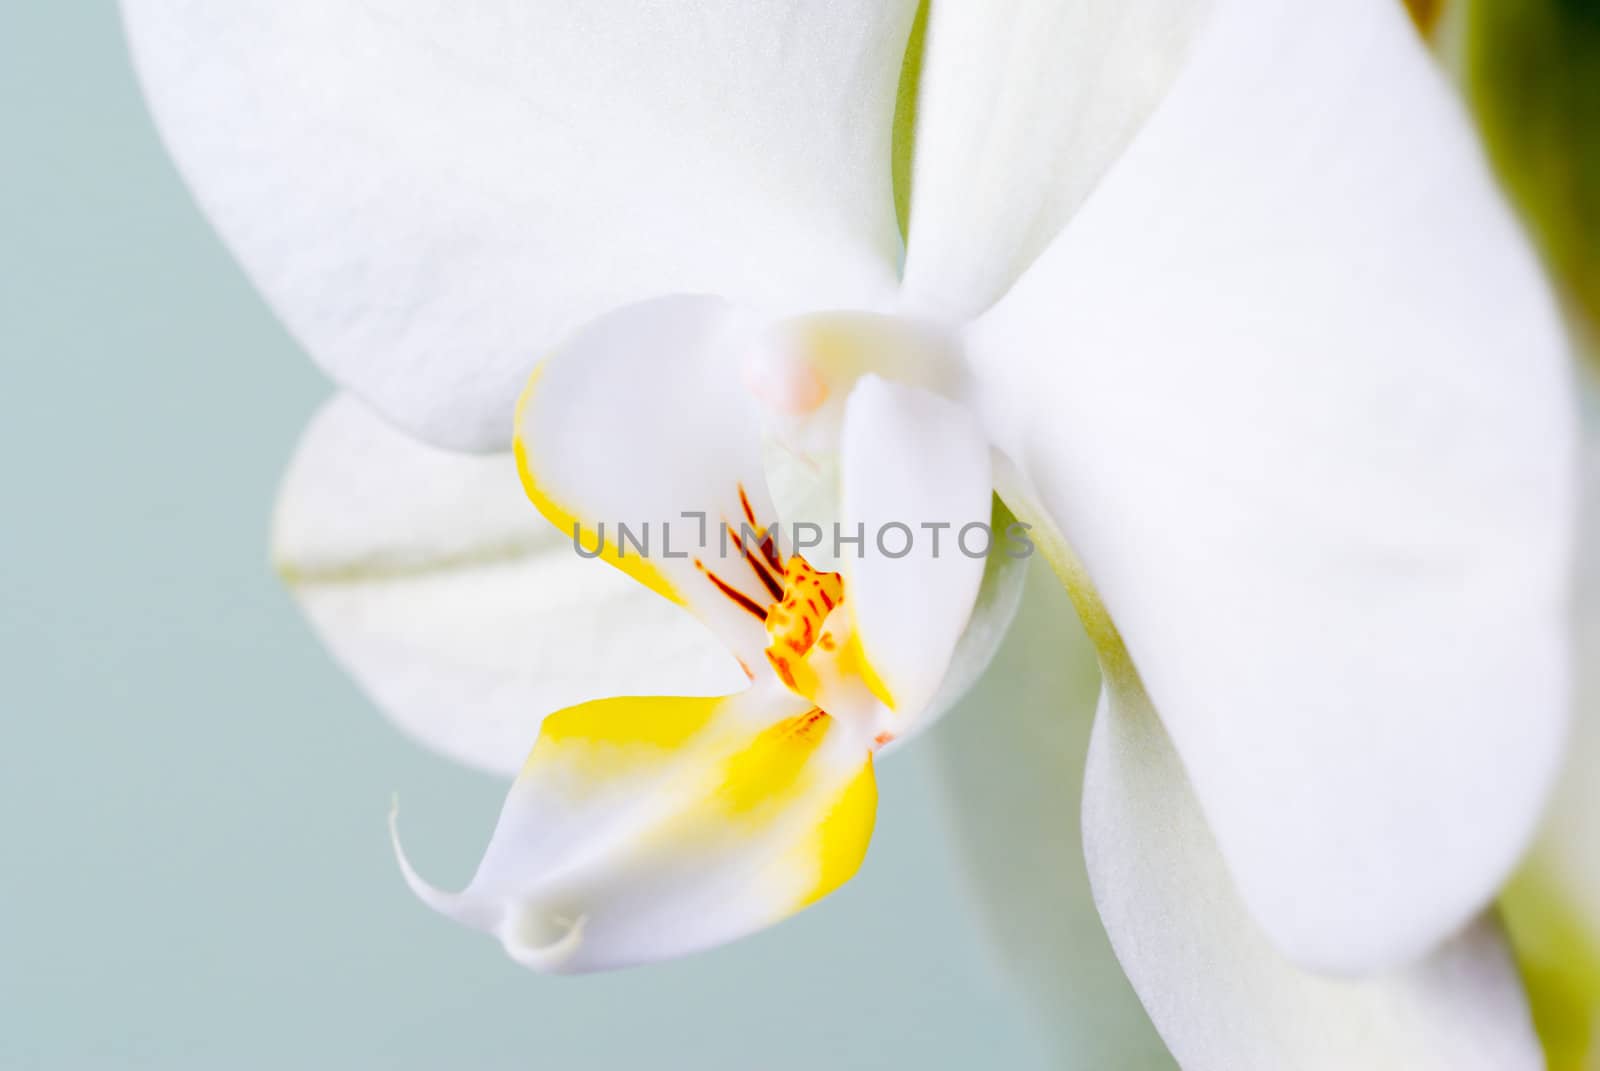 Orchid flower detail - selective focus.